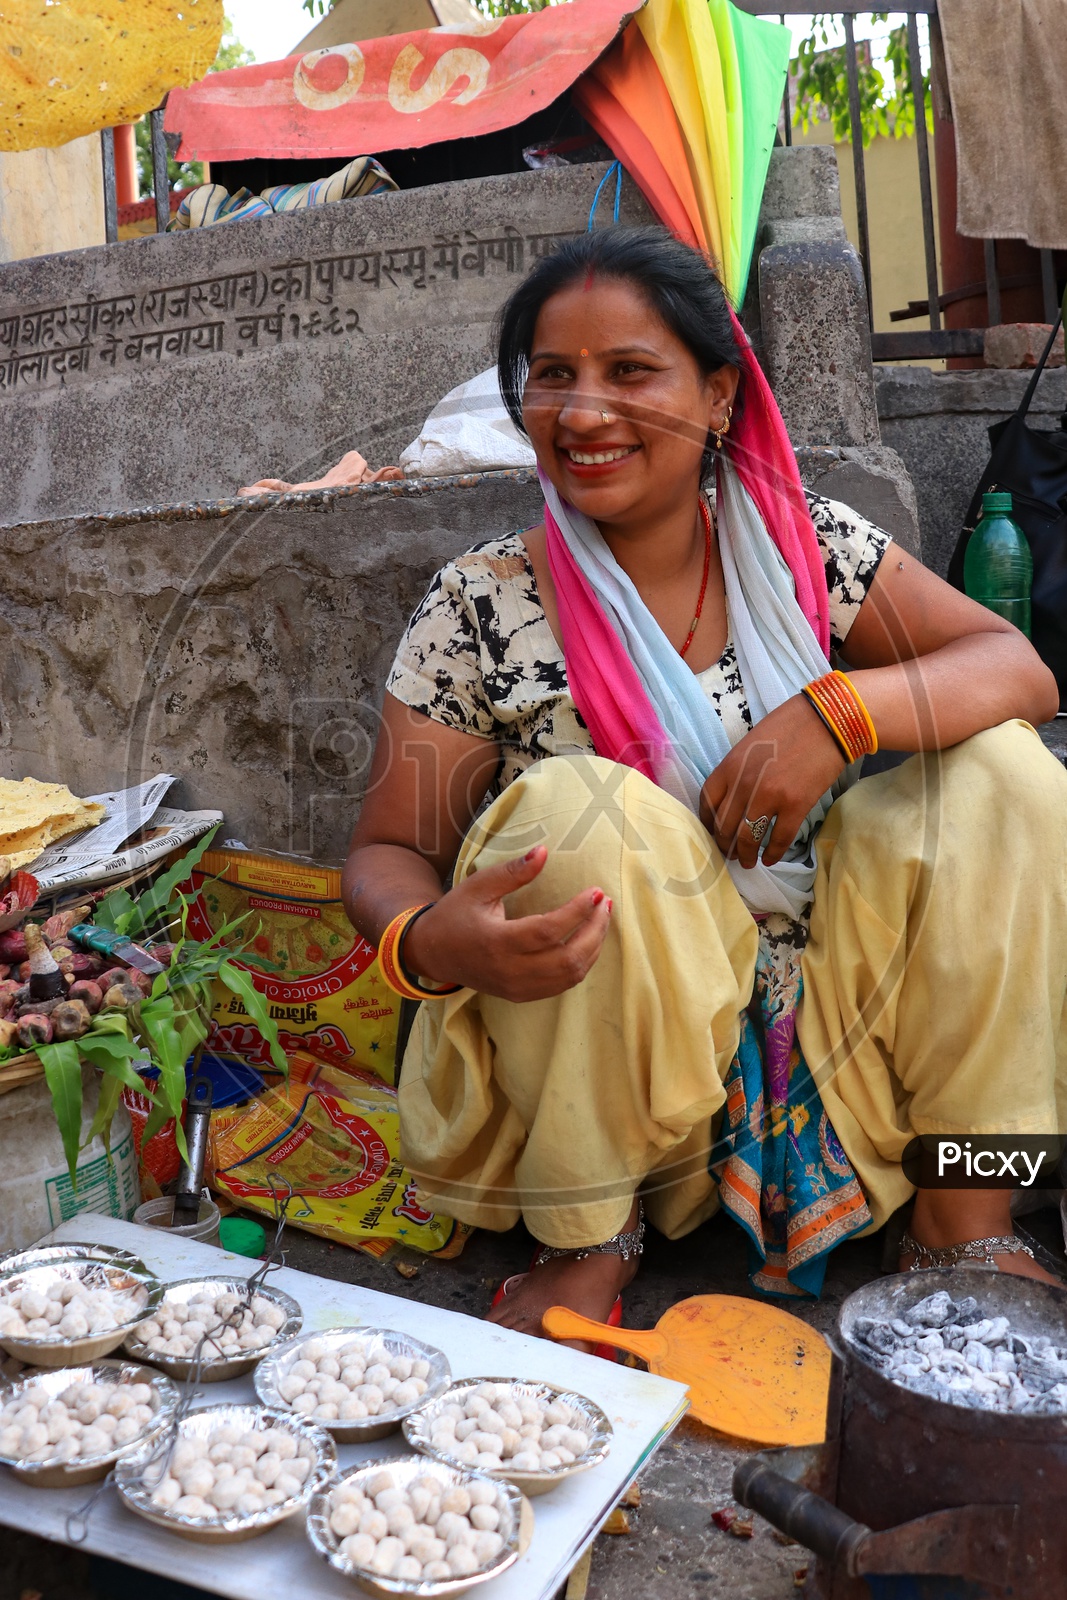 Smiling woman street vendor selling food